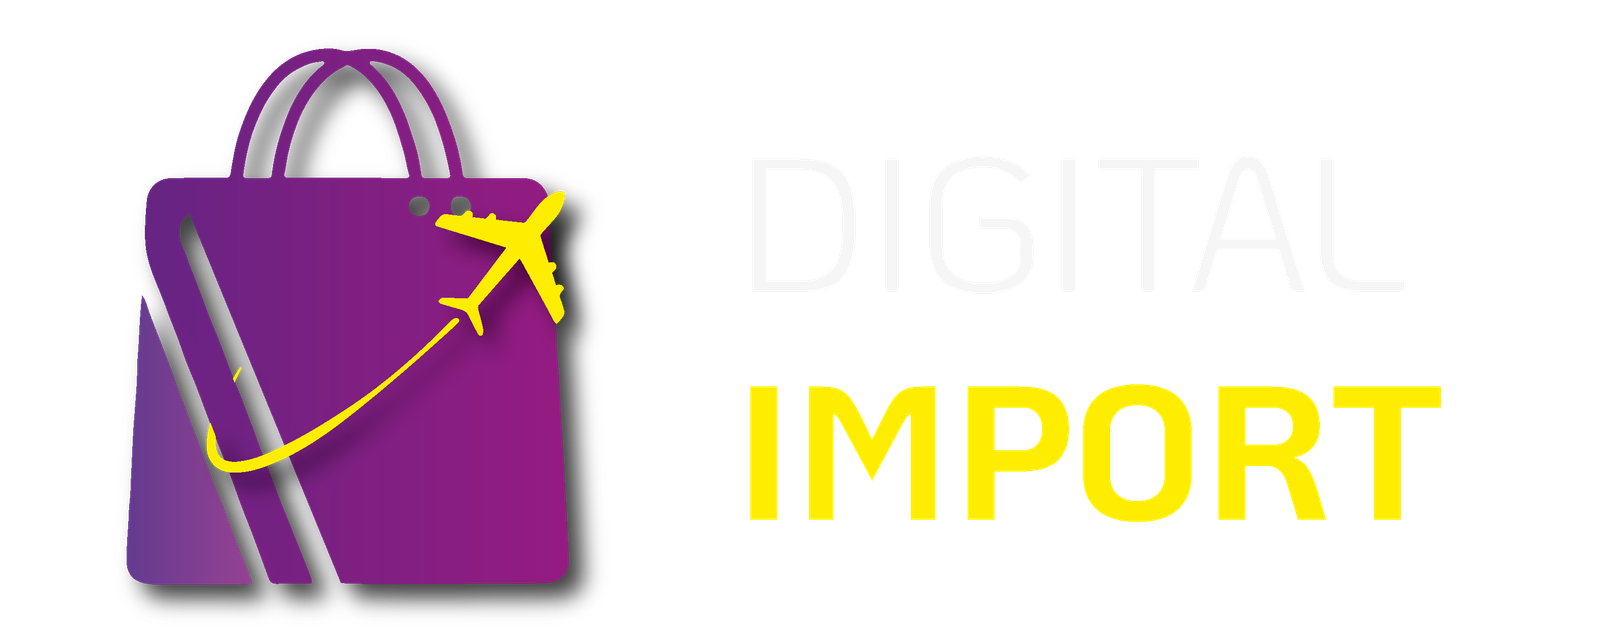 Digital Import